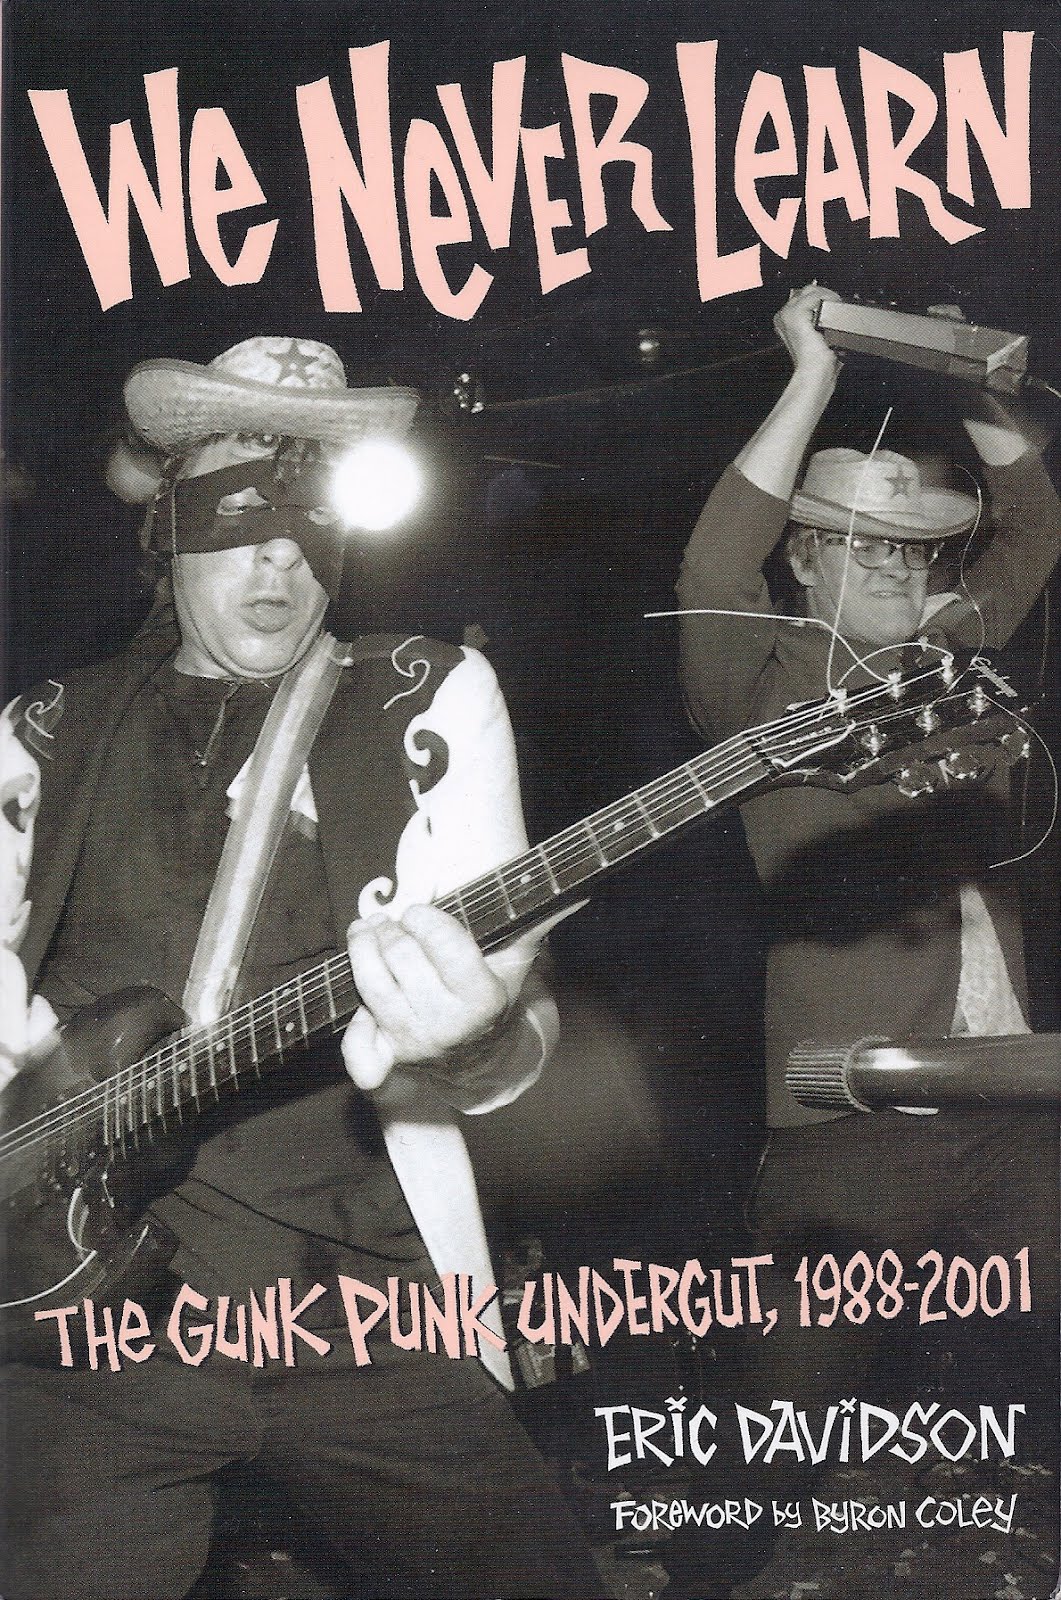 We Never Learn: The Gunk Punk Undergut, 1988-2001 (Book) singer. Eric Davidson